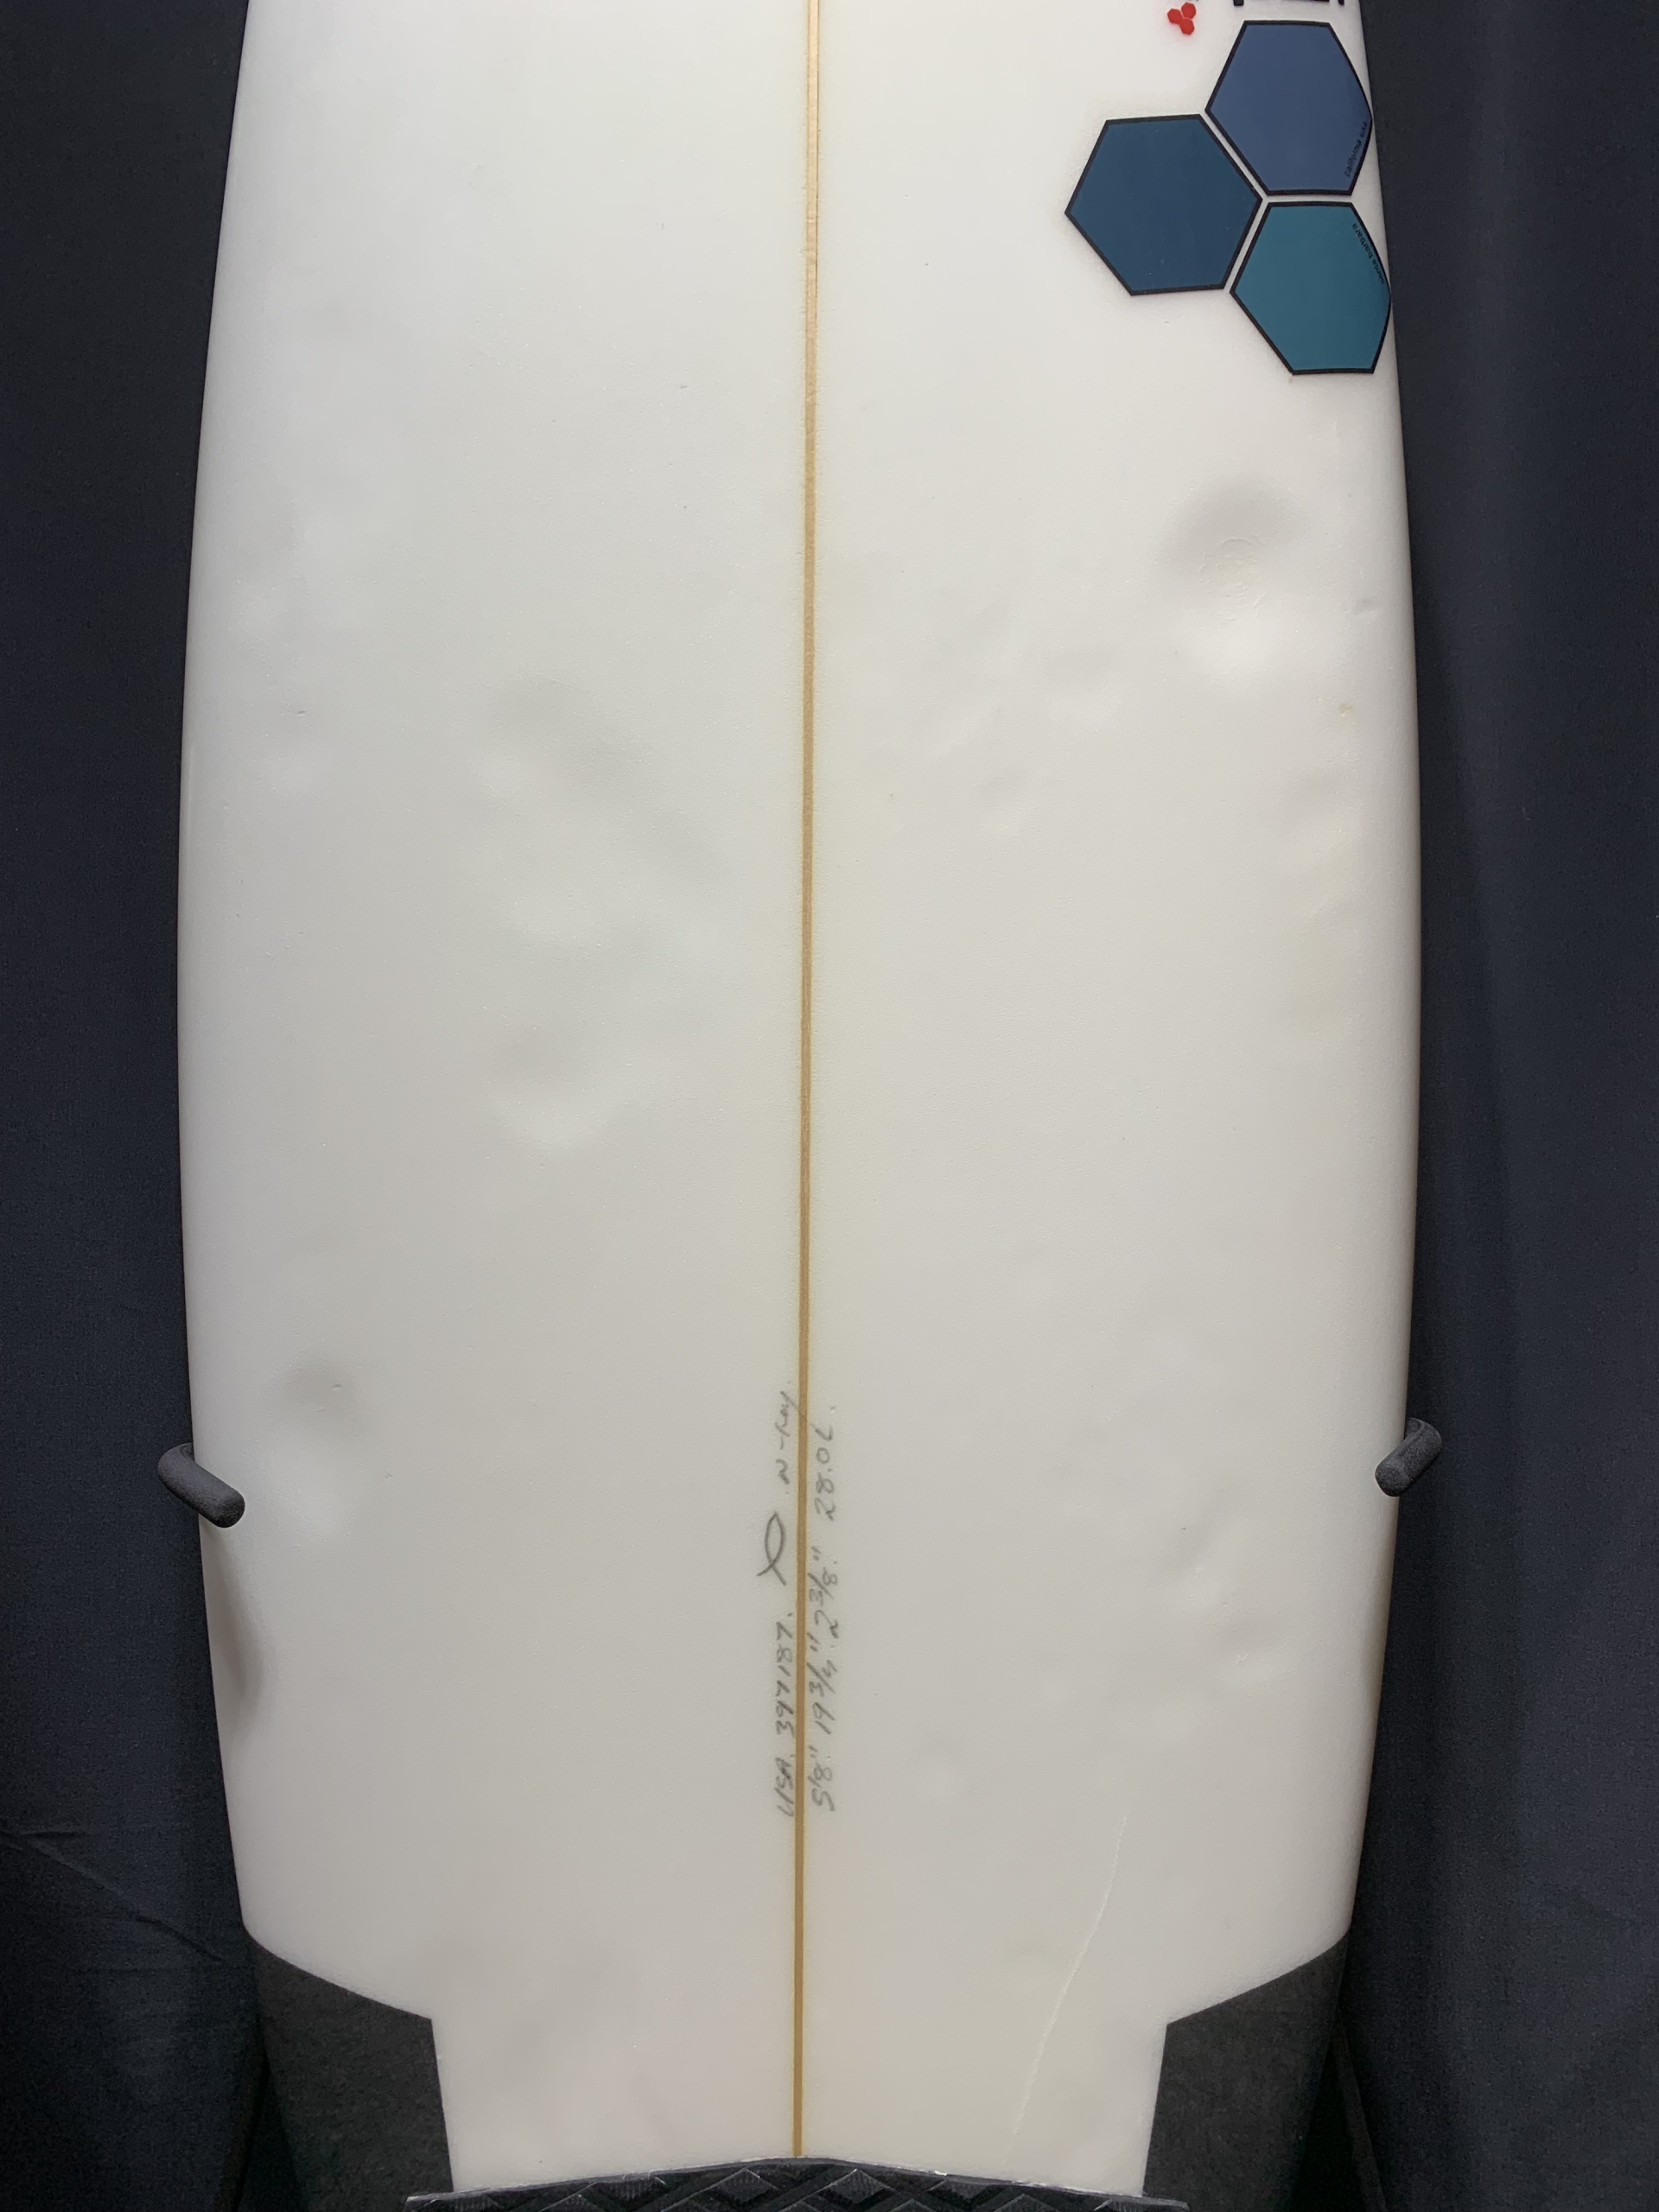 surfboards-7